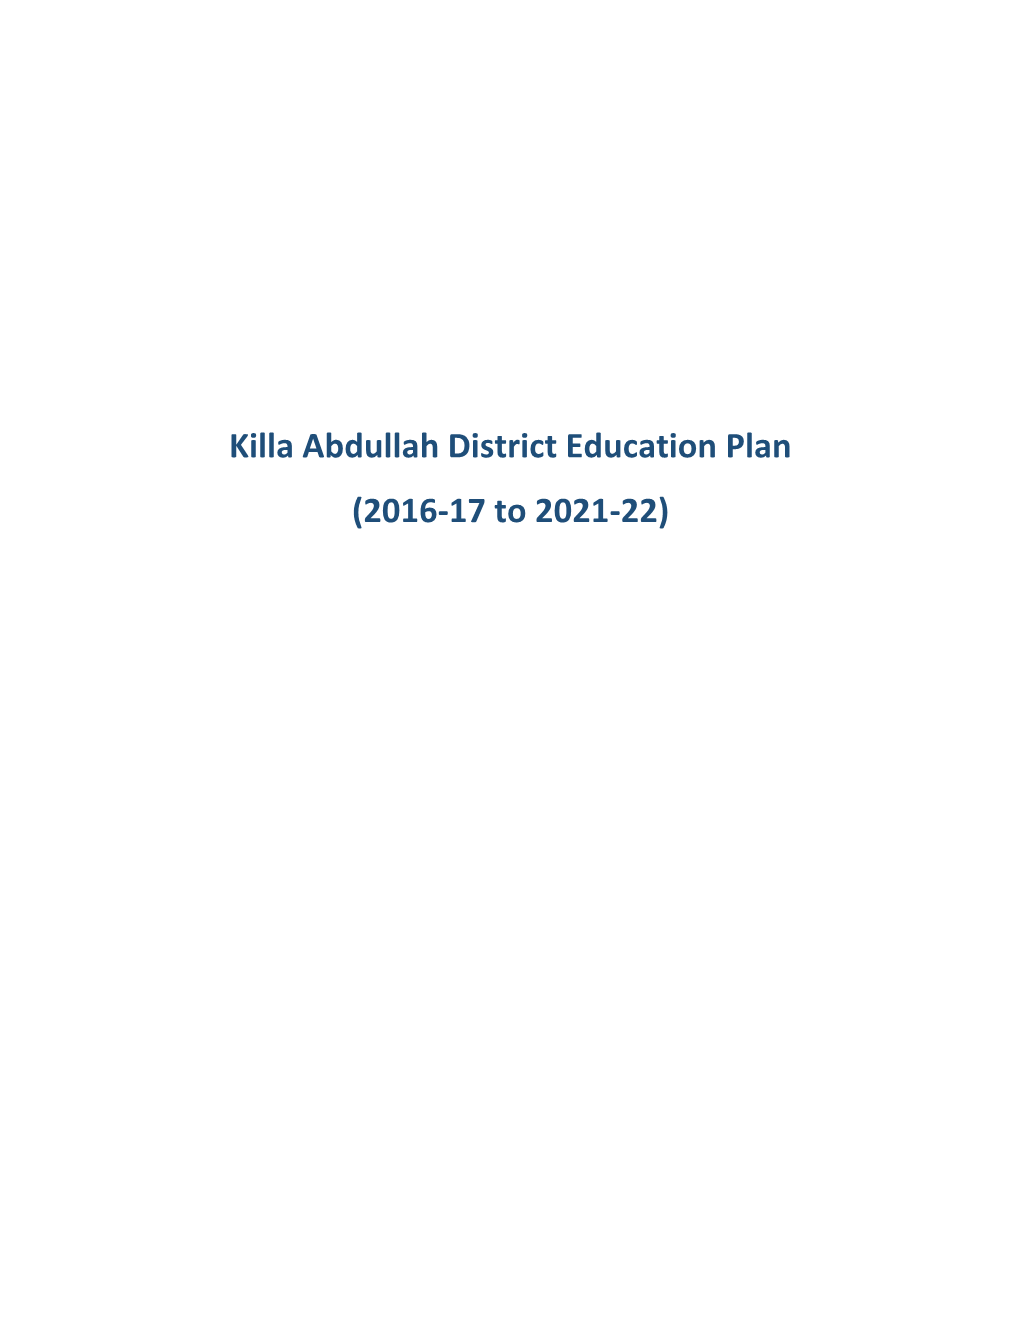 Killa Abdullah District Education Plan (2016-17 to 2021-22)